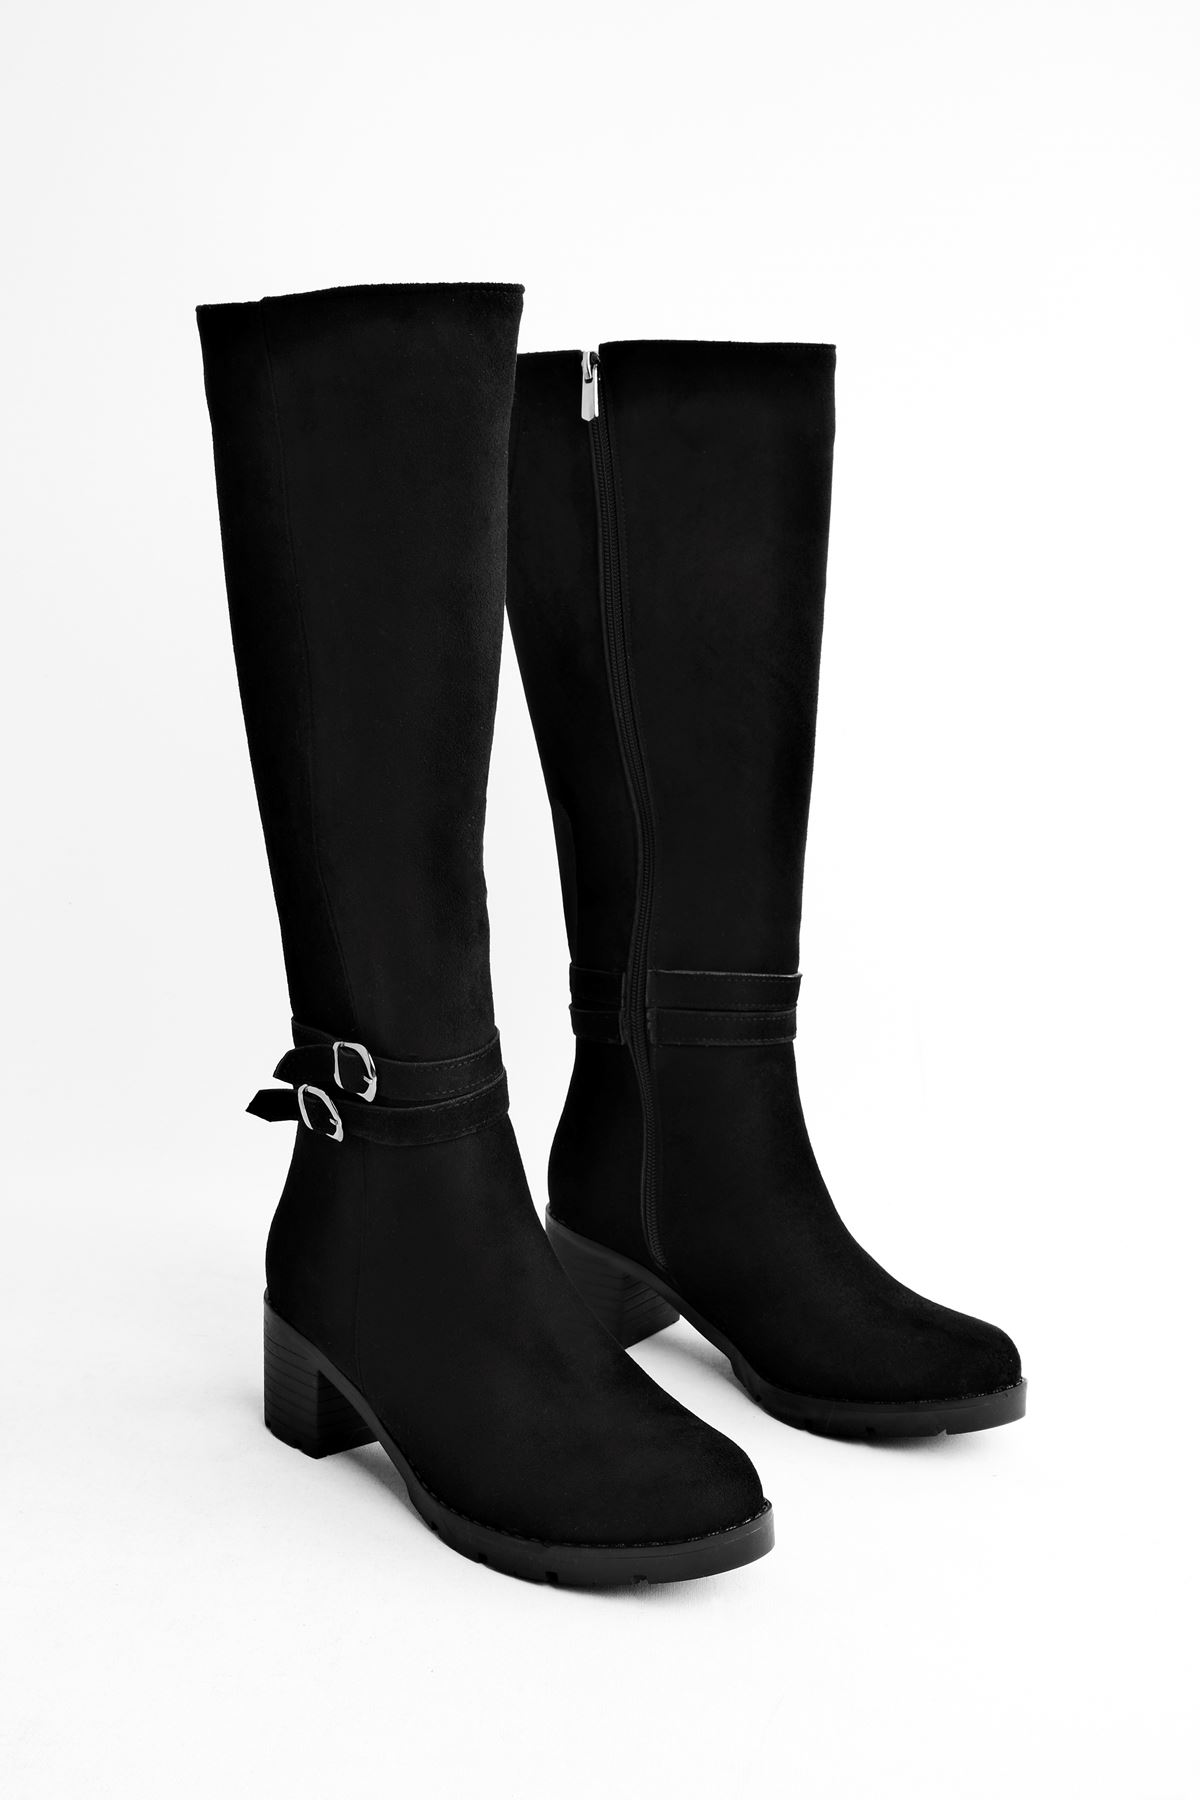 Bloom Kadın Topuklu Çizme İki Kemer Detaylı-S.Siyah